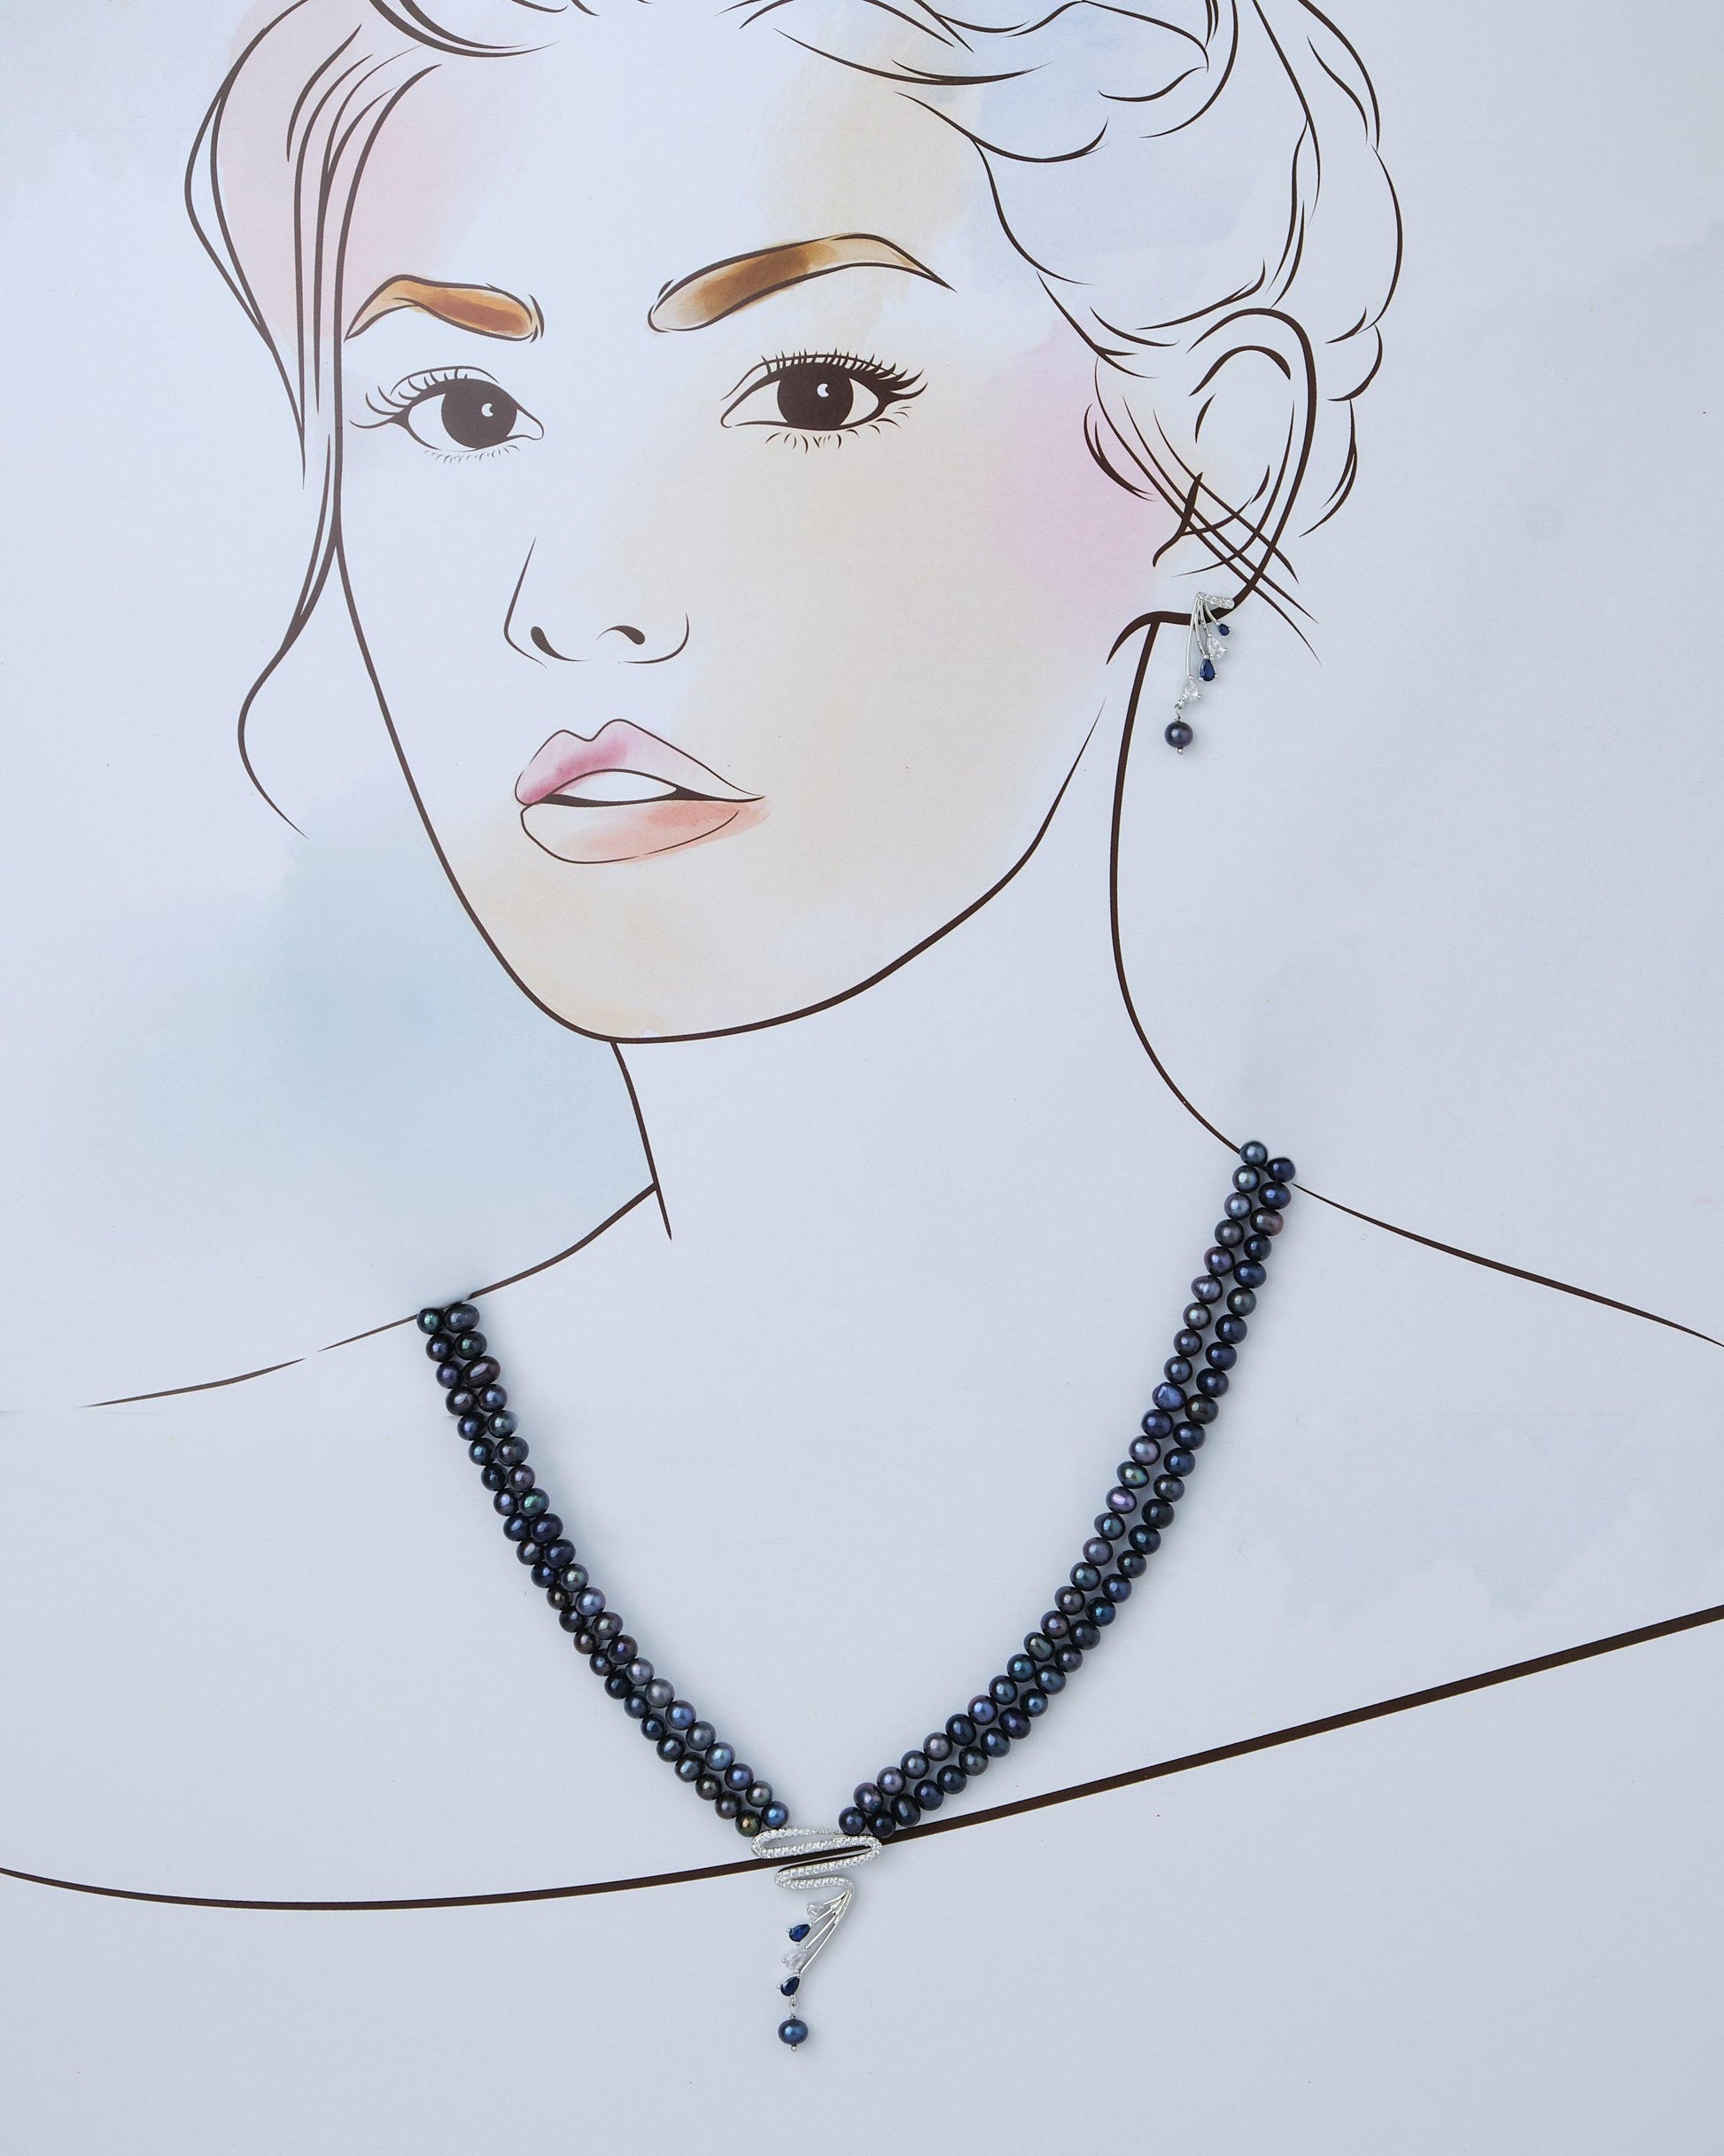 Trendy Beautiful Pearl Necklace Set - Chandrani Pearls